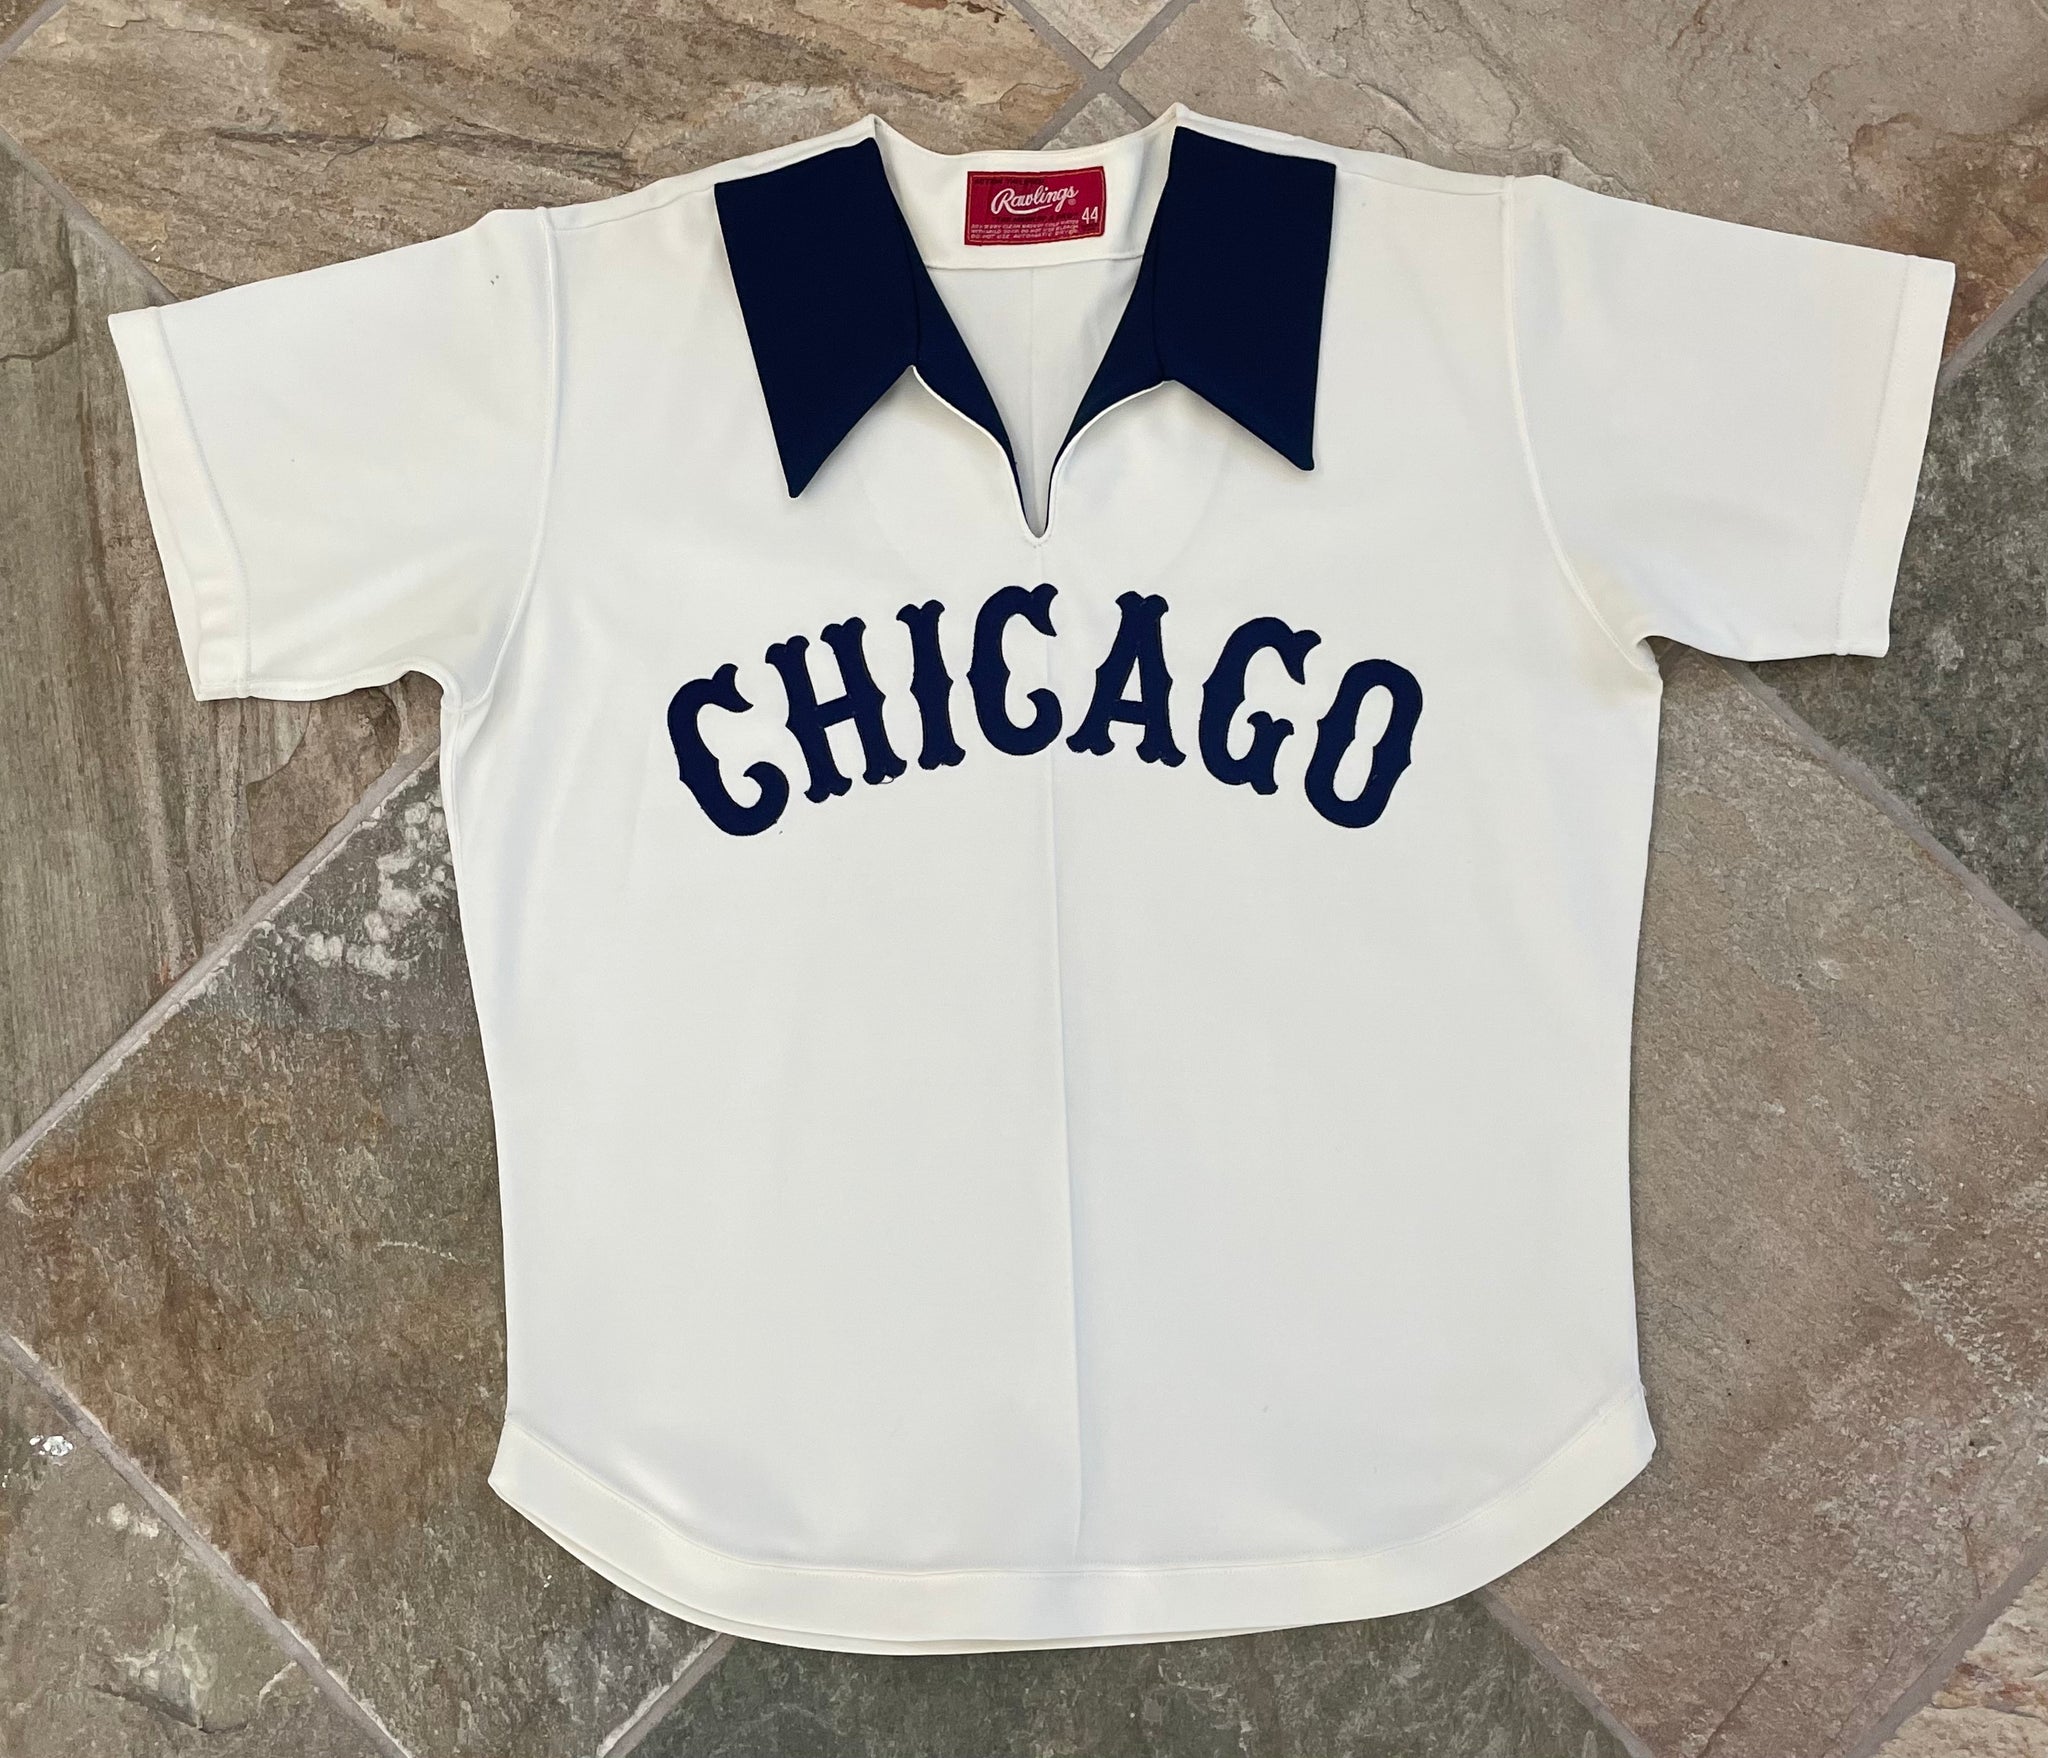 1976 white sox jersey